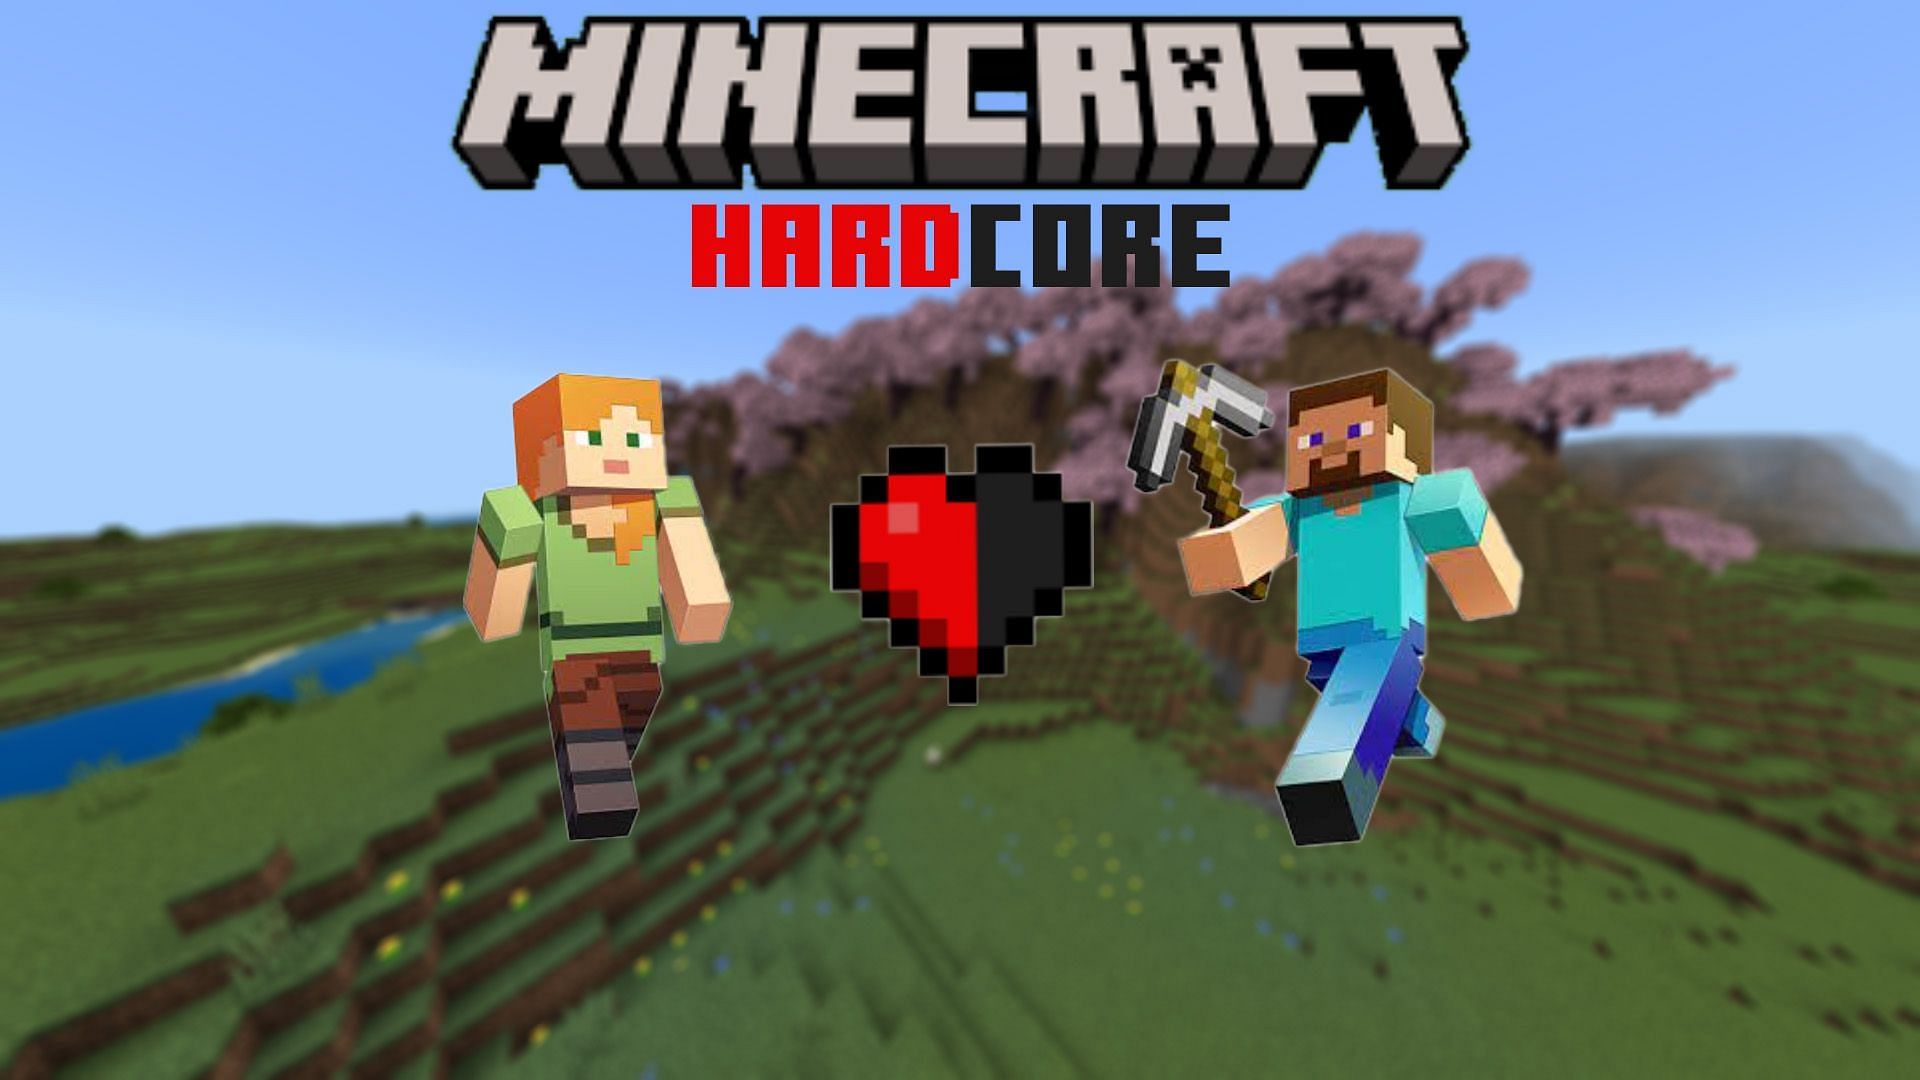 Explore the Half-hearted hardcore setting in Minecraft (Image via Mojang)